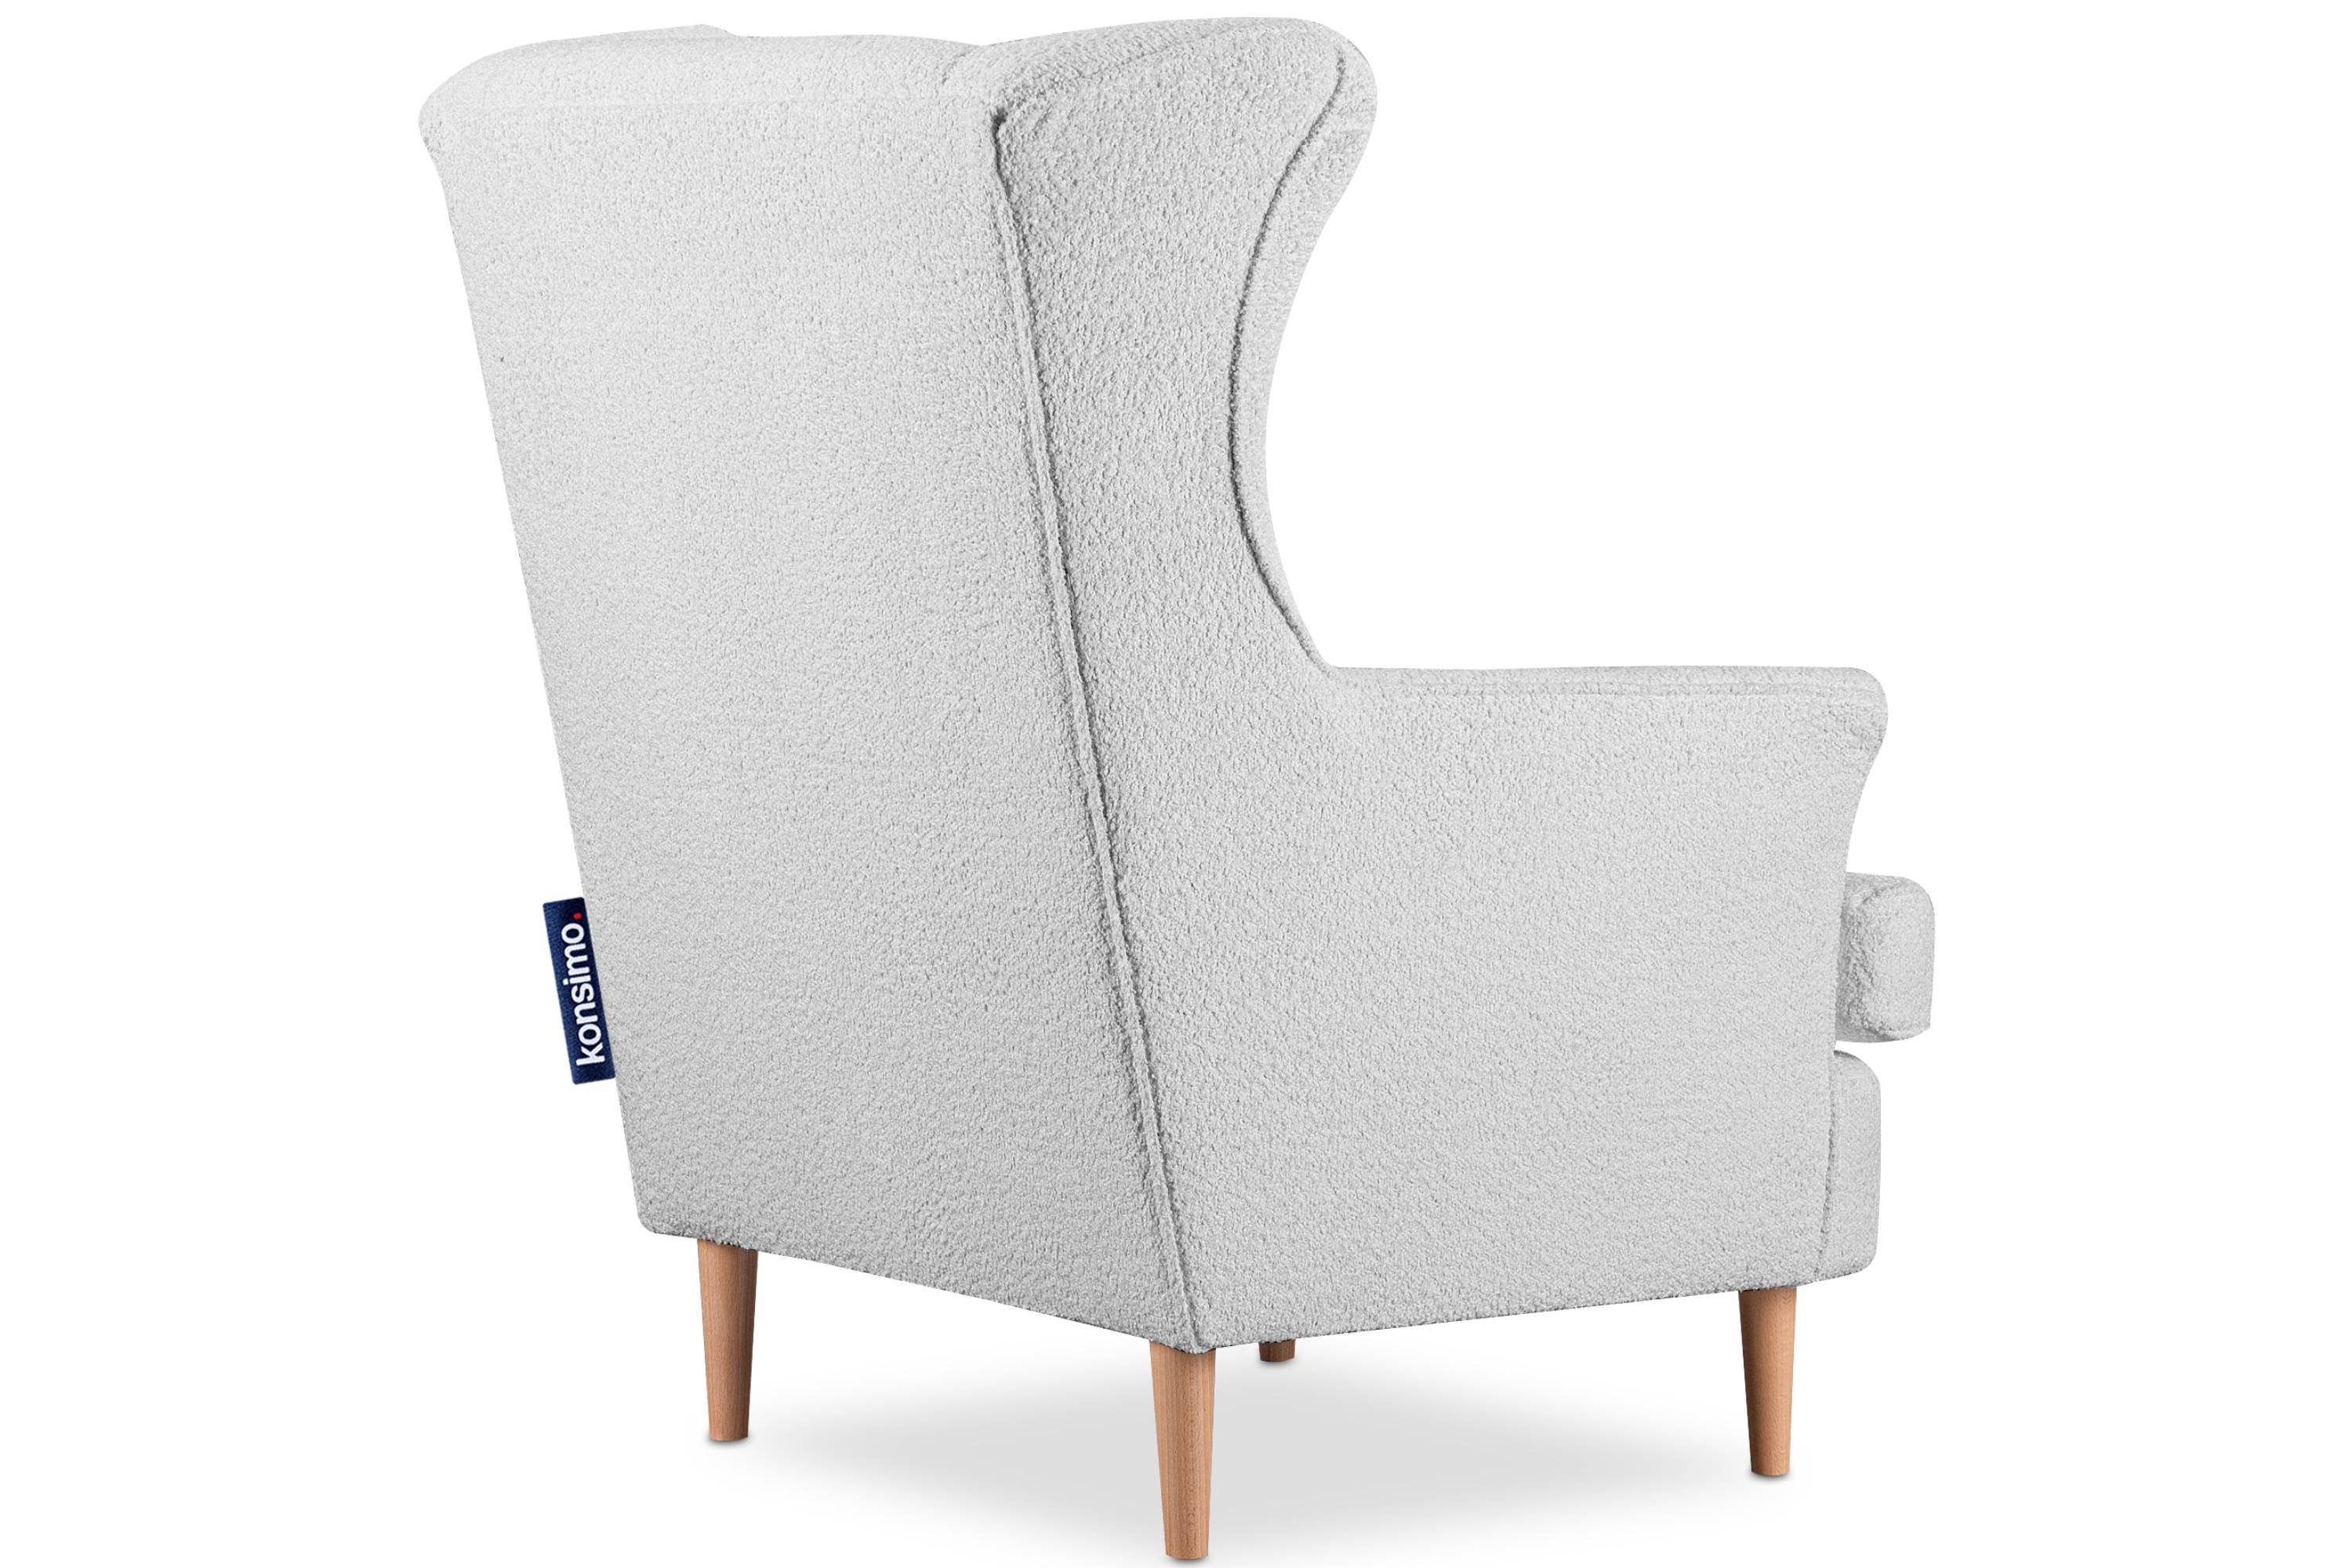 STRALIS Design, dekorativem inklusive Ohrensessel Füße, Konsimo Hocker, hohe zeitloses Sessel Kissen mit